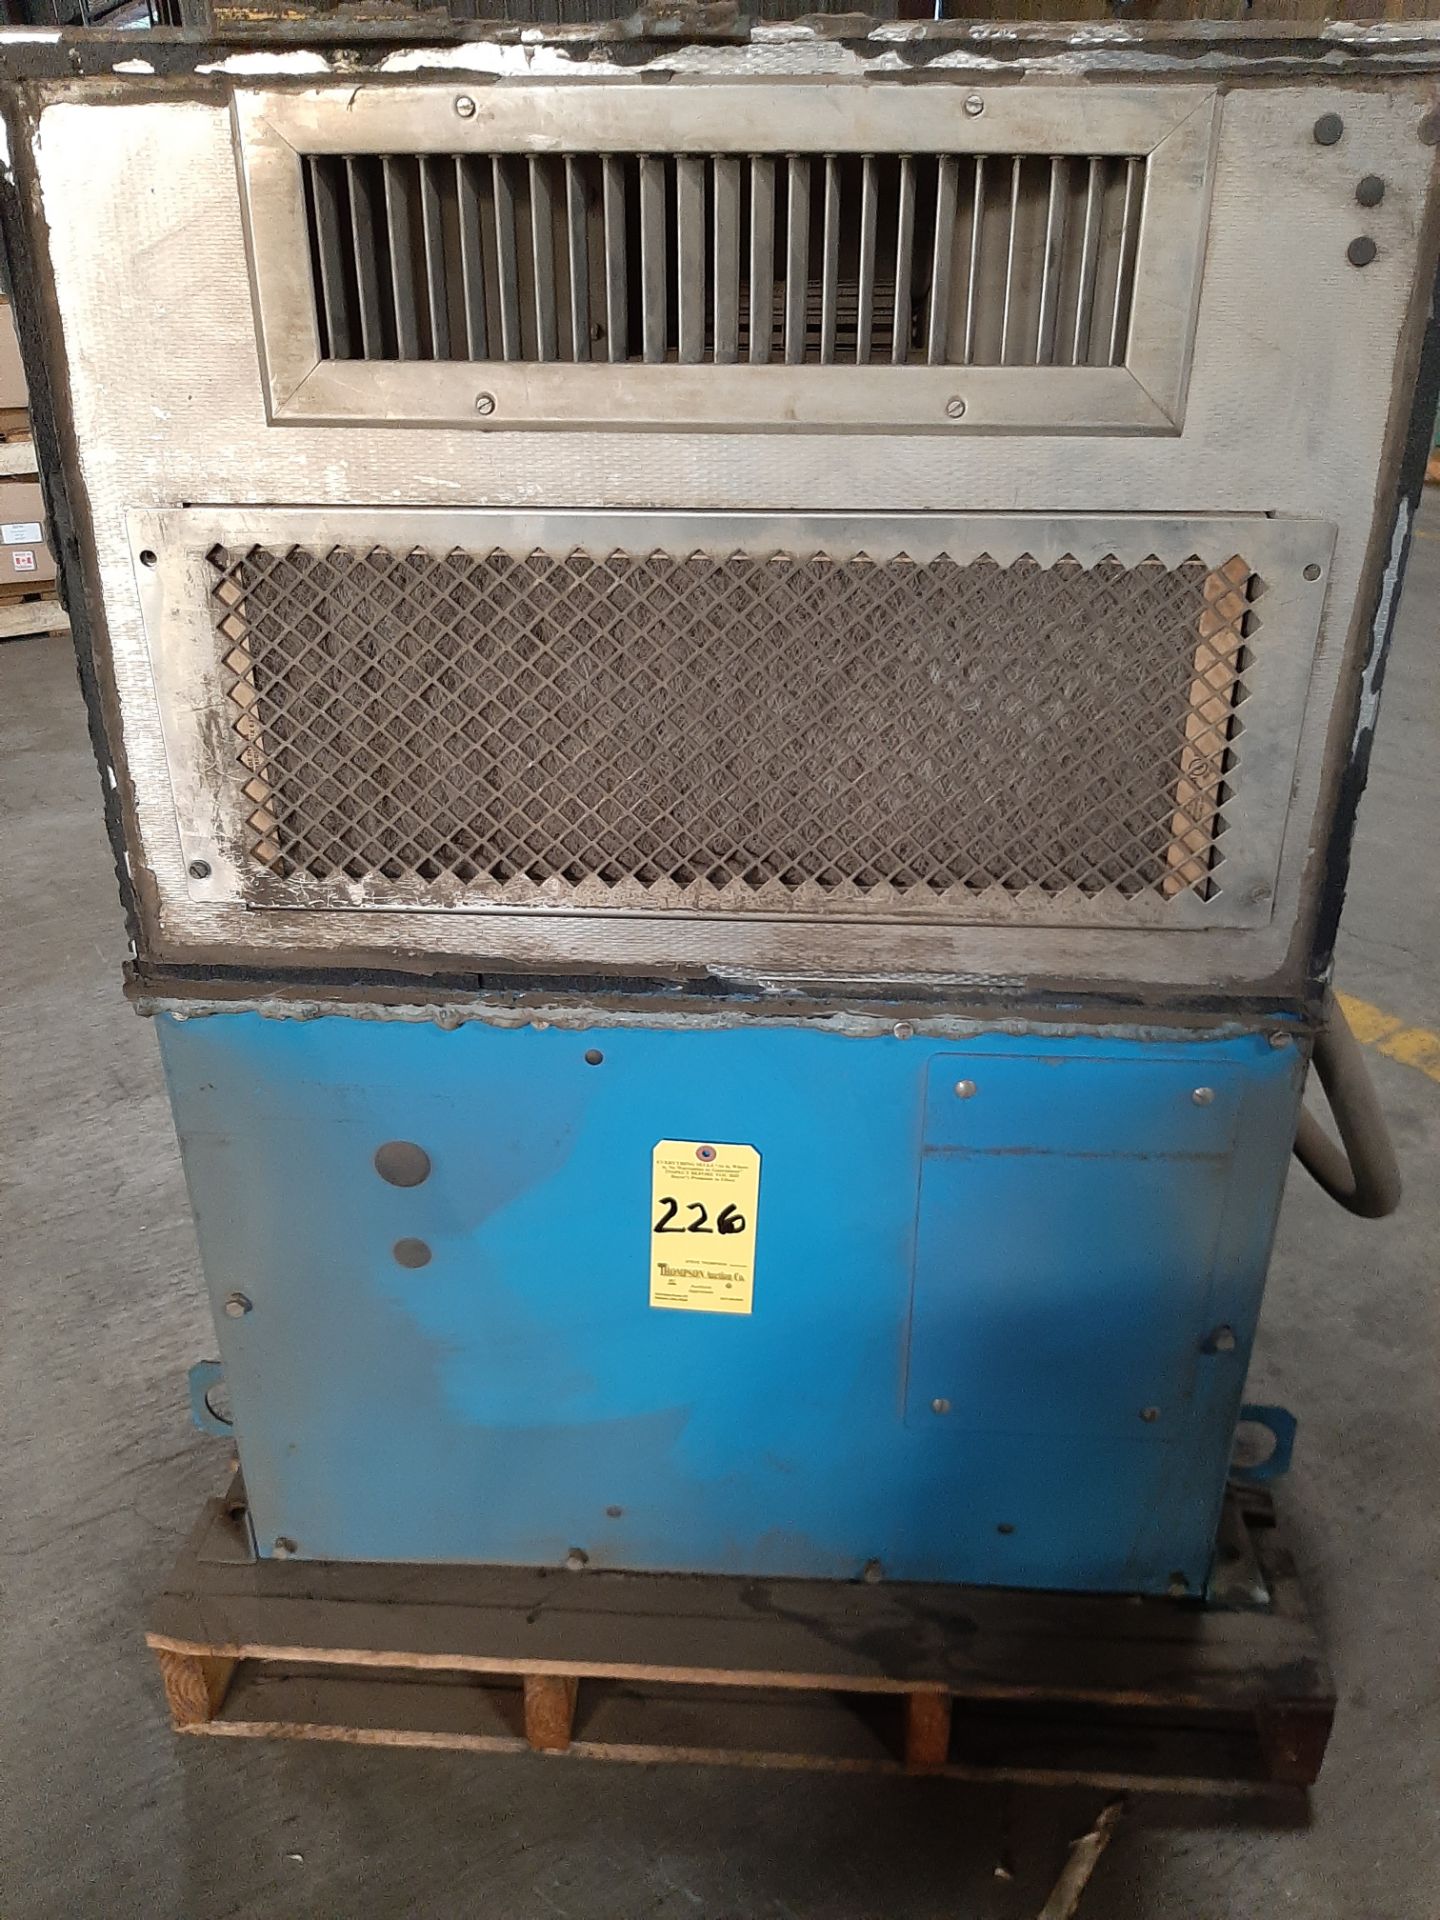 Lintern Air Conditioner, Model 22824SV, s/n 460870158